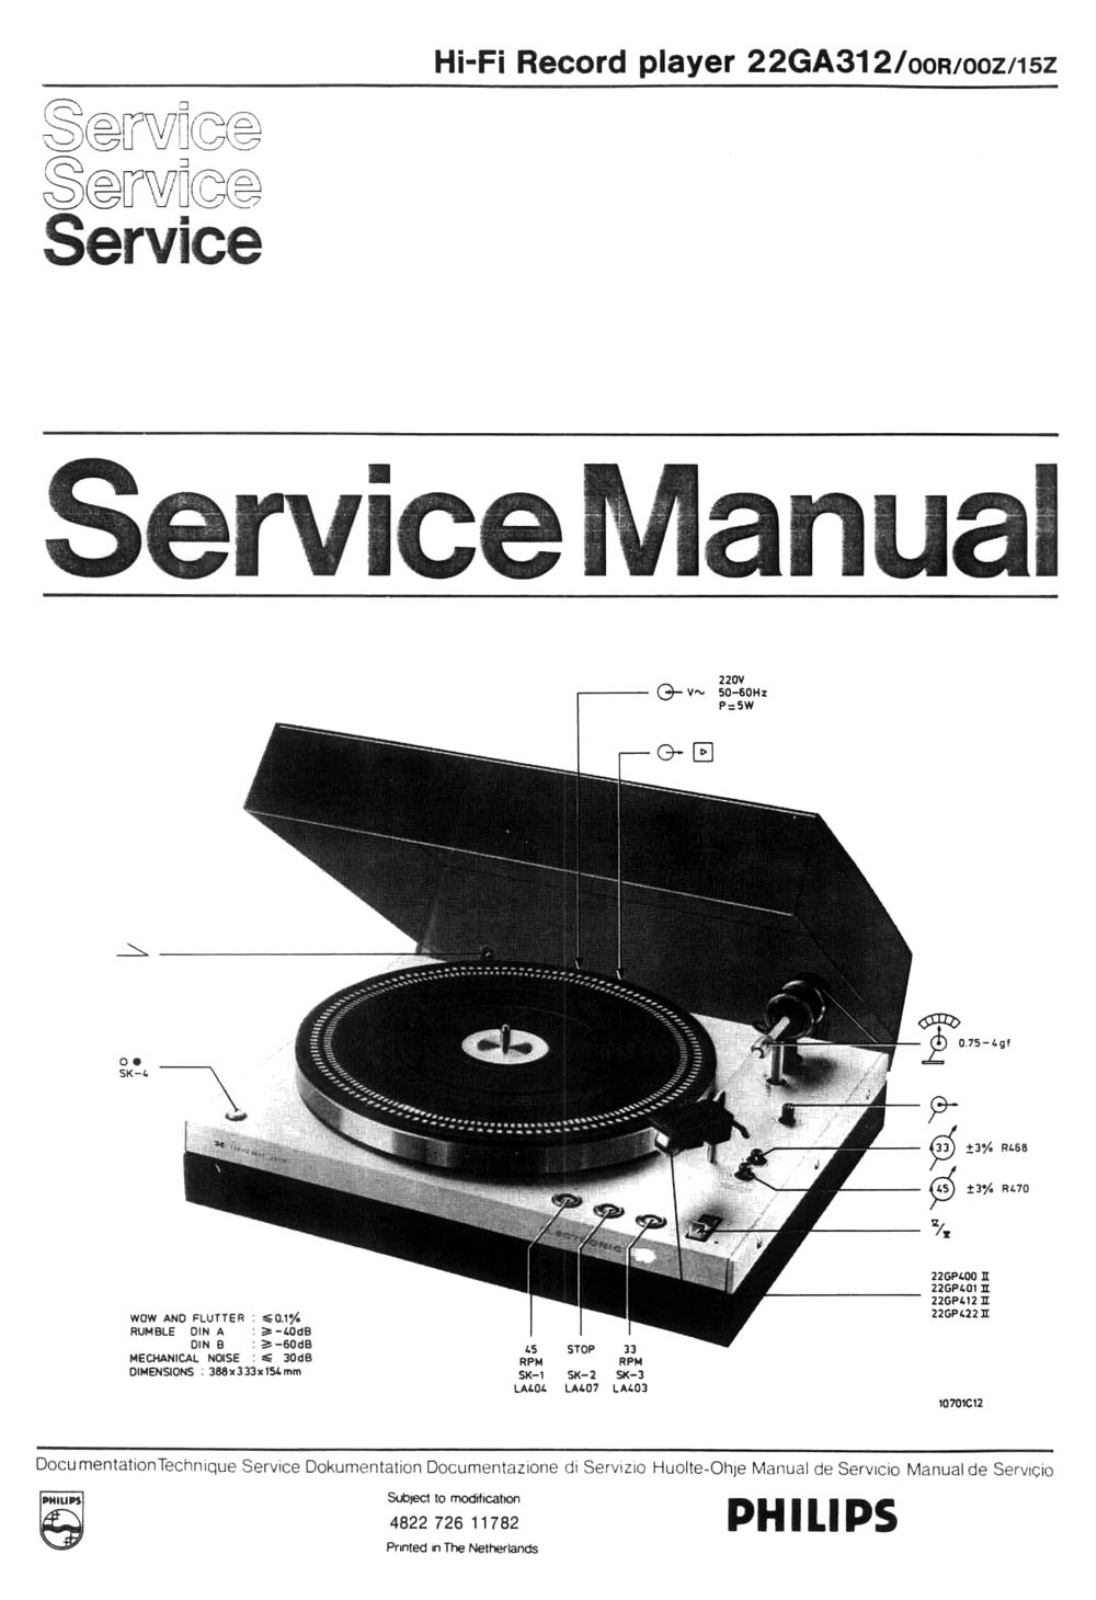 Philips 22-GA-312 Service Manual